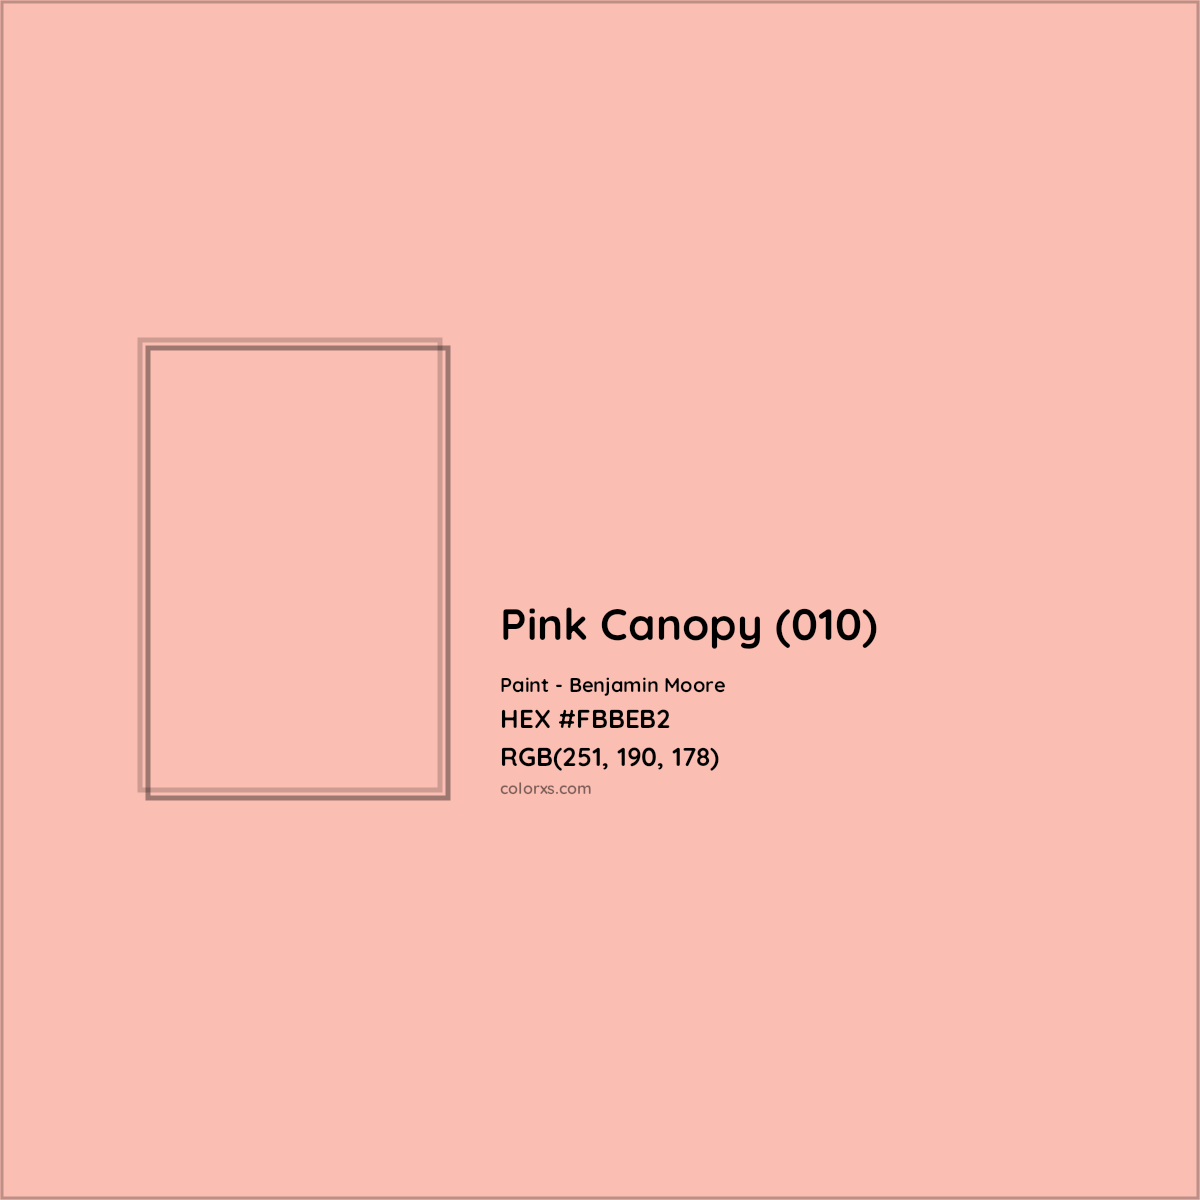 HEX #FBBEB2 Pink Canopy (010) Paint Benjamin Moore - Color Code